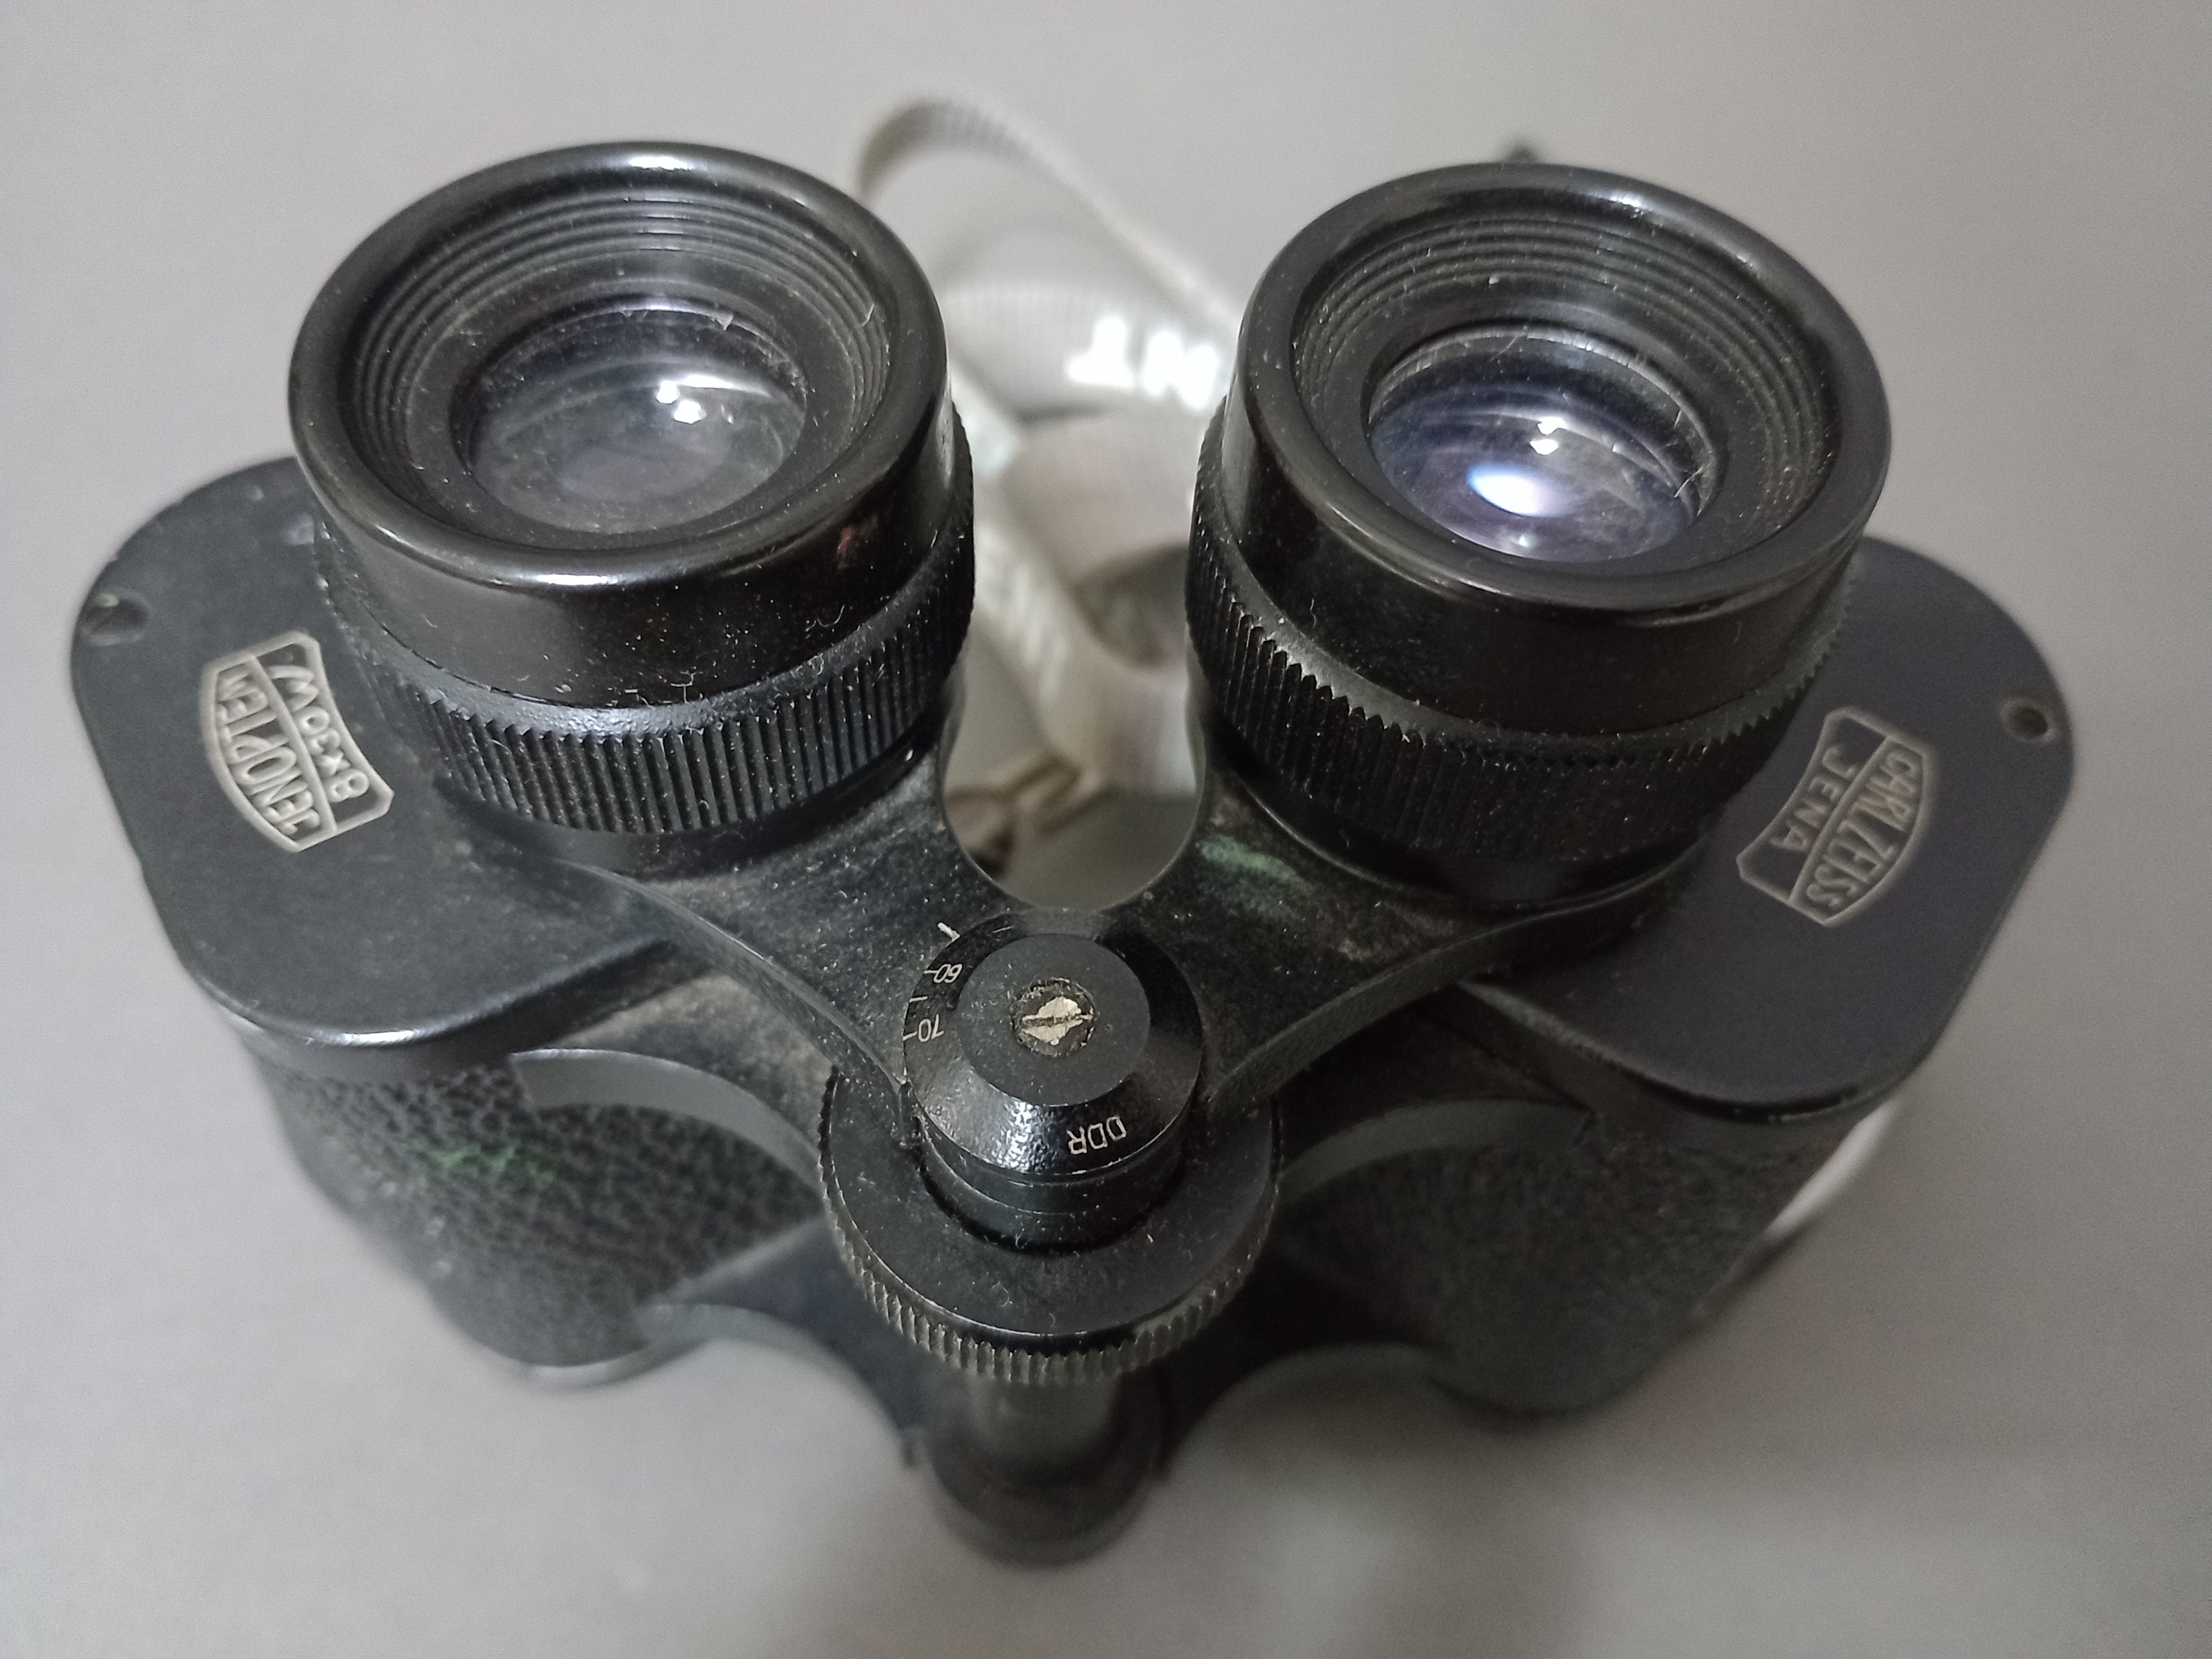 A pair of Carl Zeiss Jena Jenoptem 8X30W binoculars - no case.